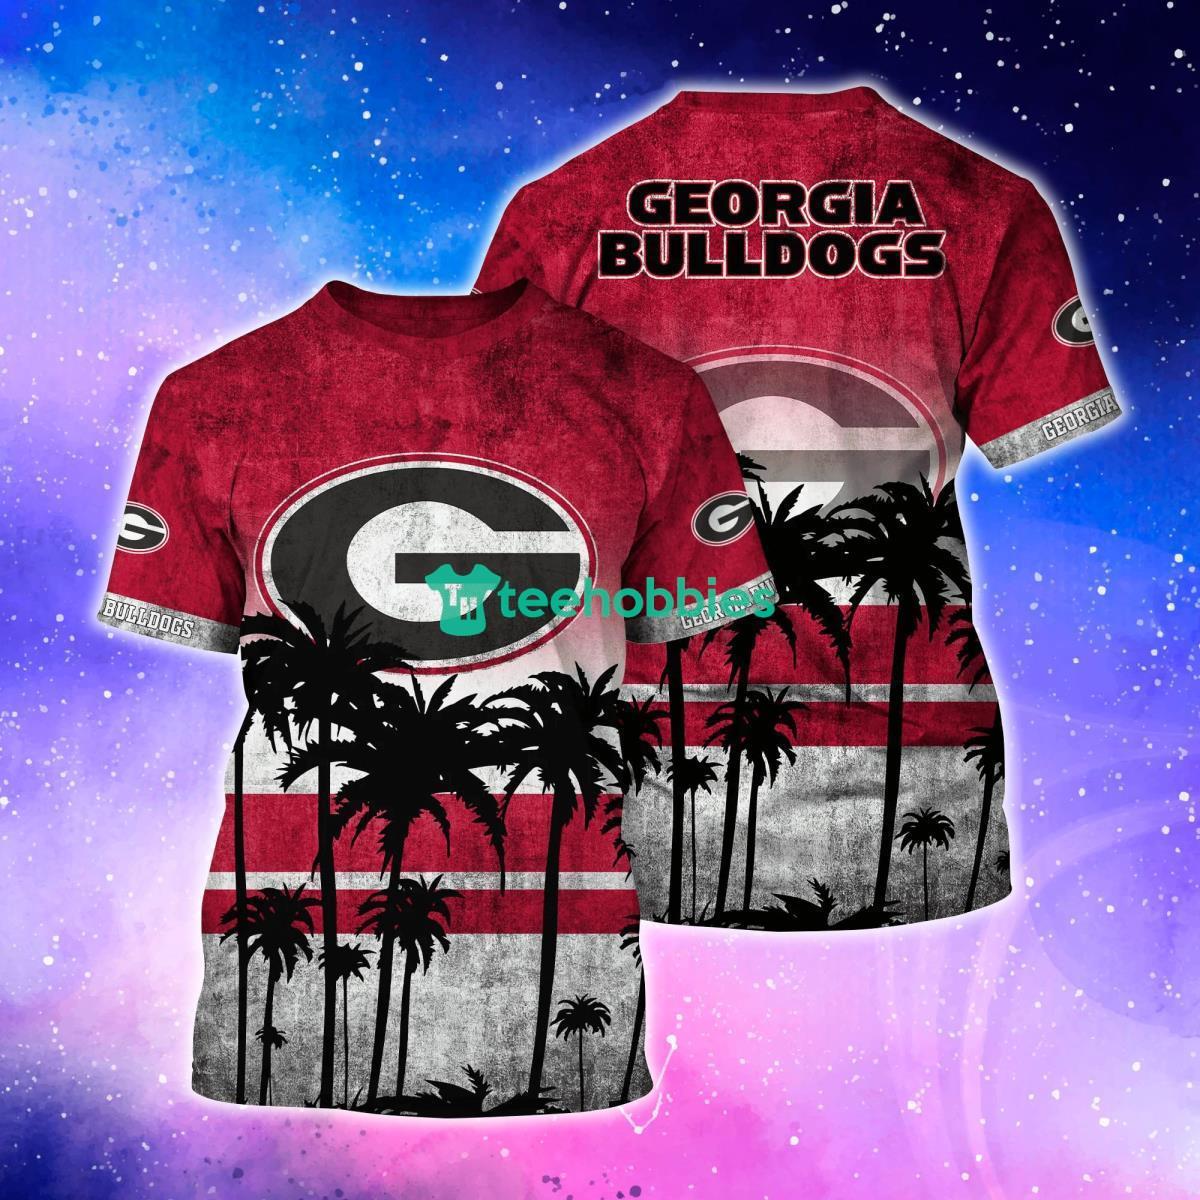 Georgia Bulldogs Hot Trending 3D T-Shirt For Fans Product Photo 1